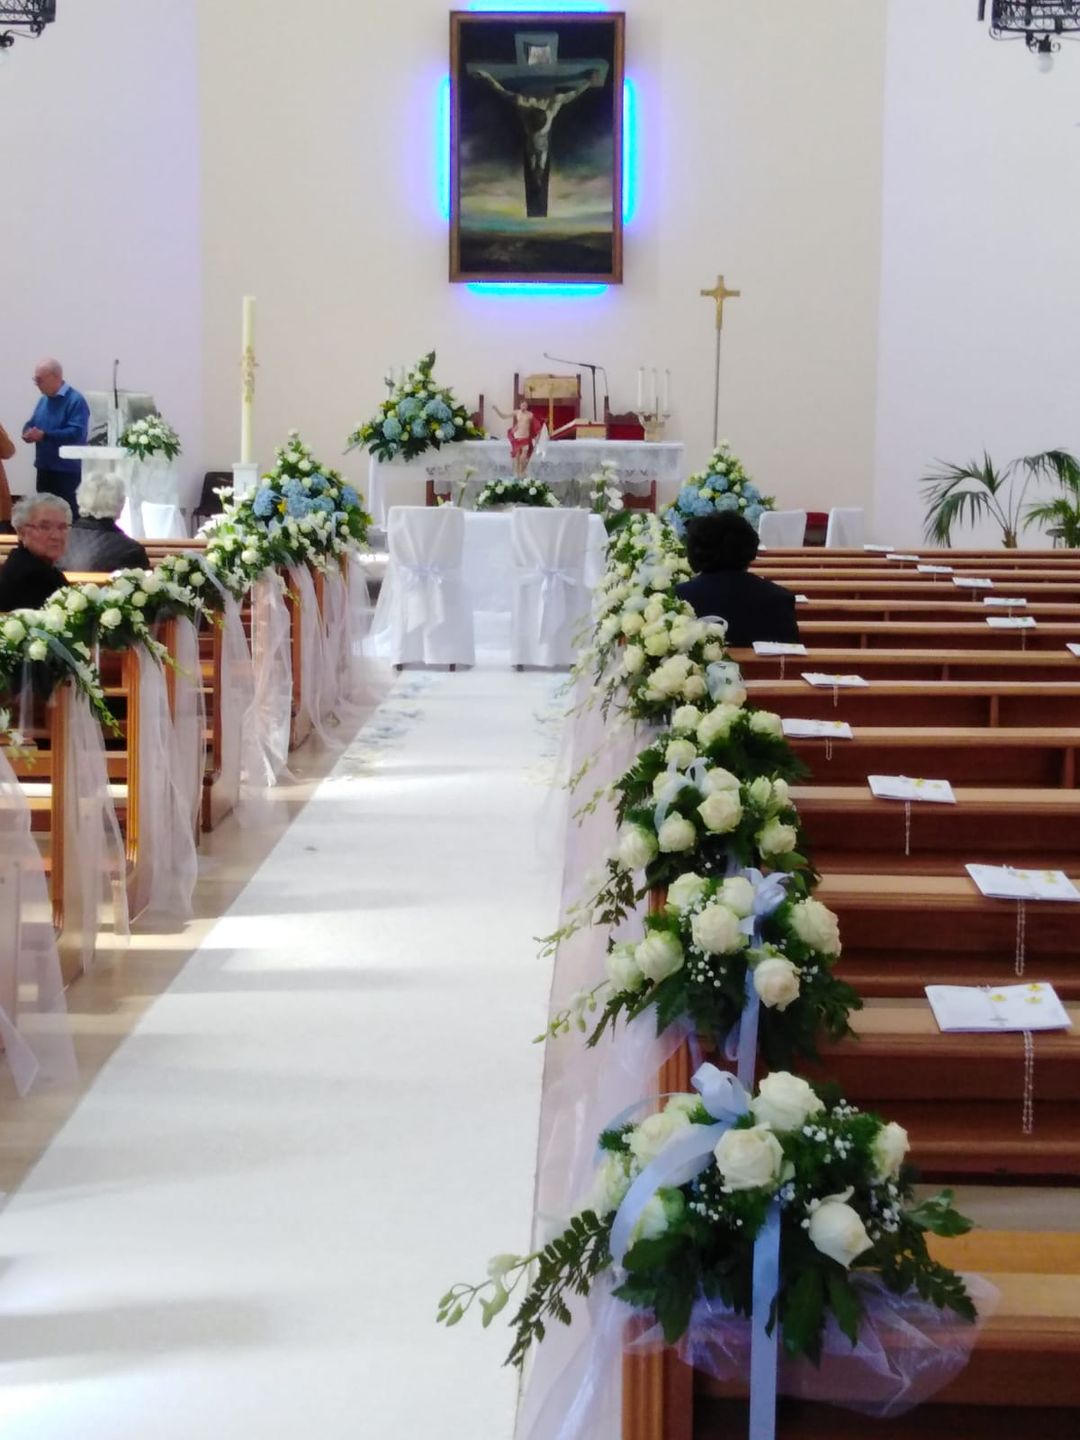 Allestimento floreale chiesa per matrimonio